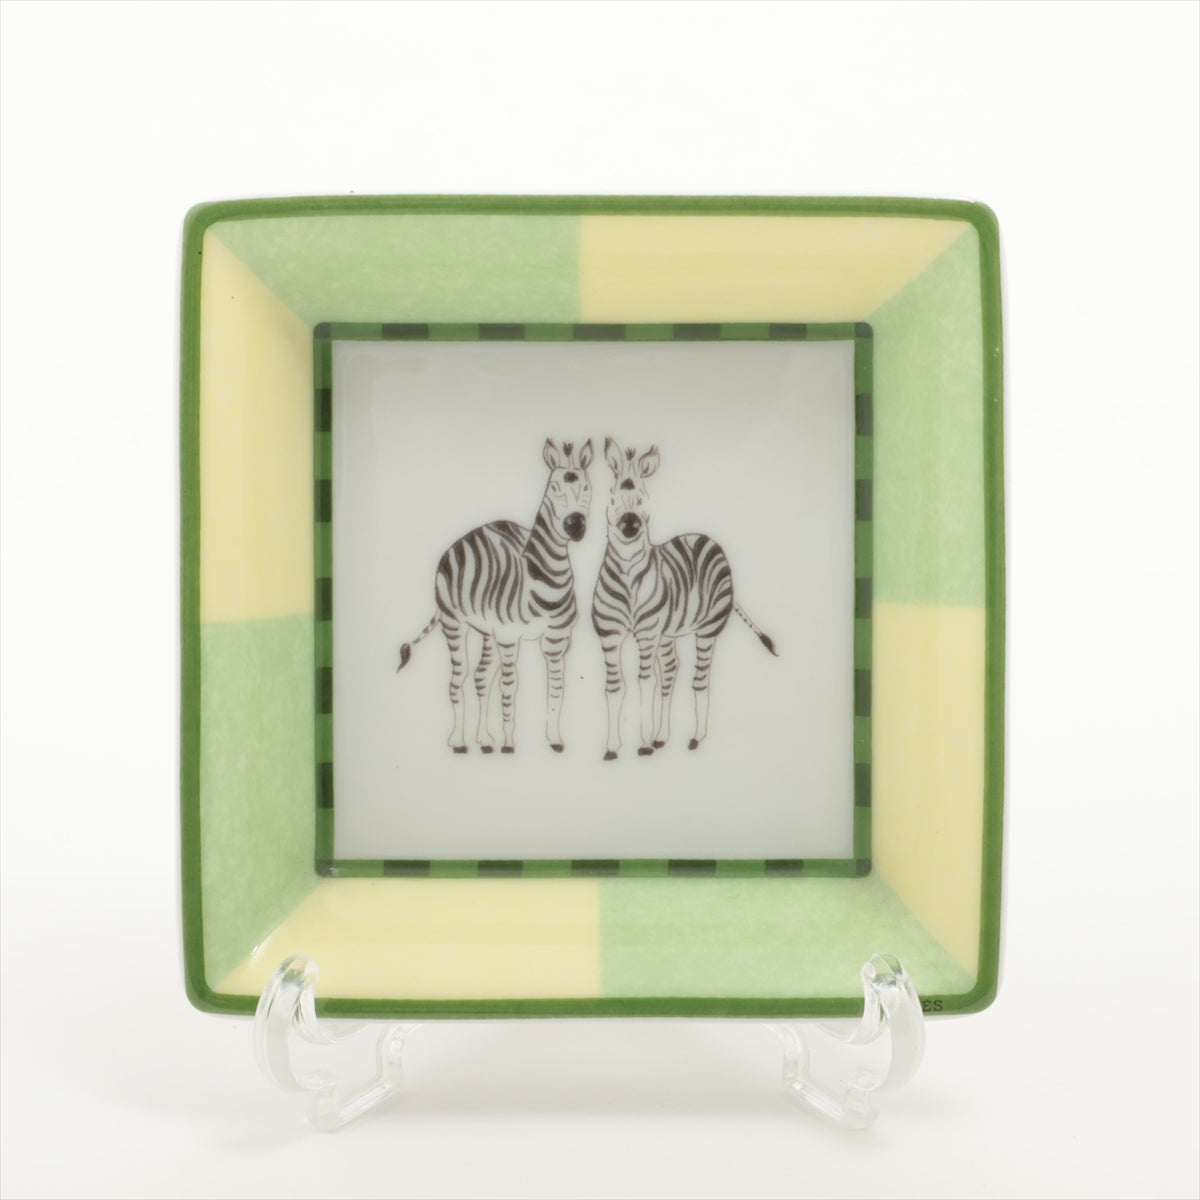 Hermès Zebra Small plate Ceramic Green